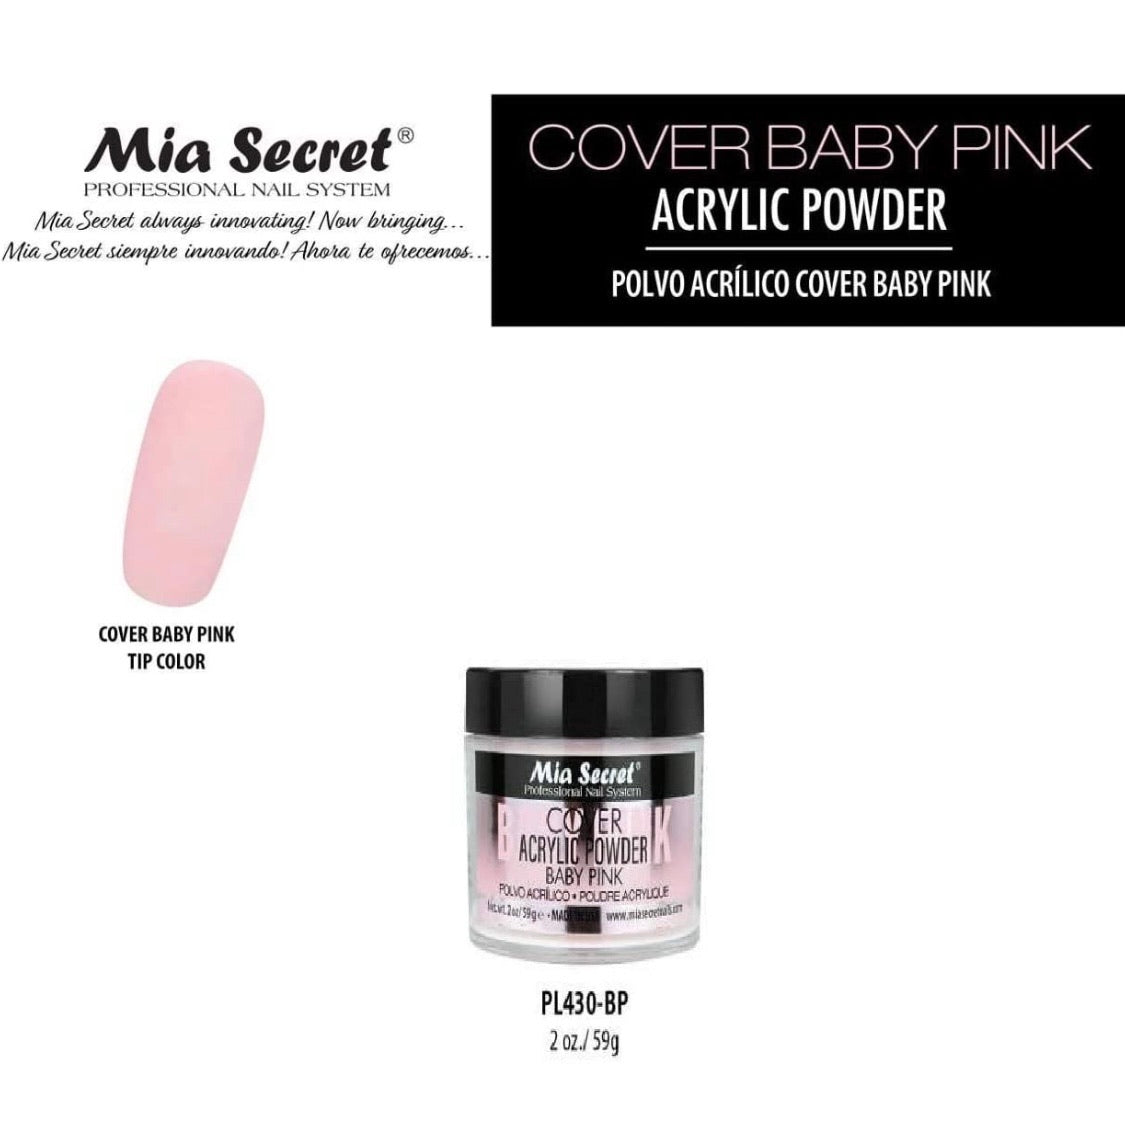 Mia Secret Cover Baby Pink Acrylic Powder 2oz